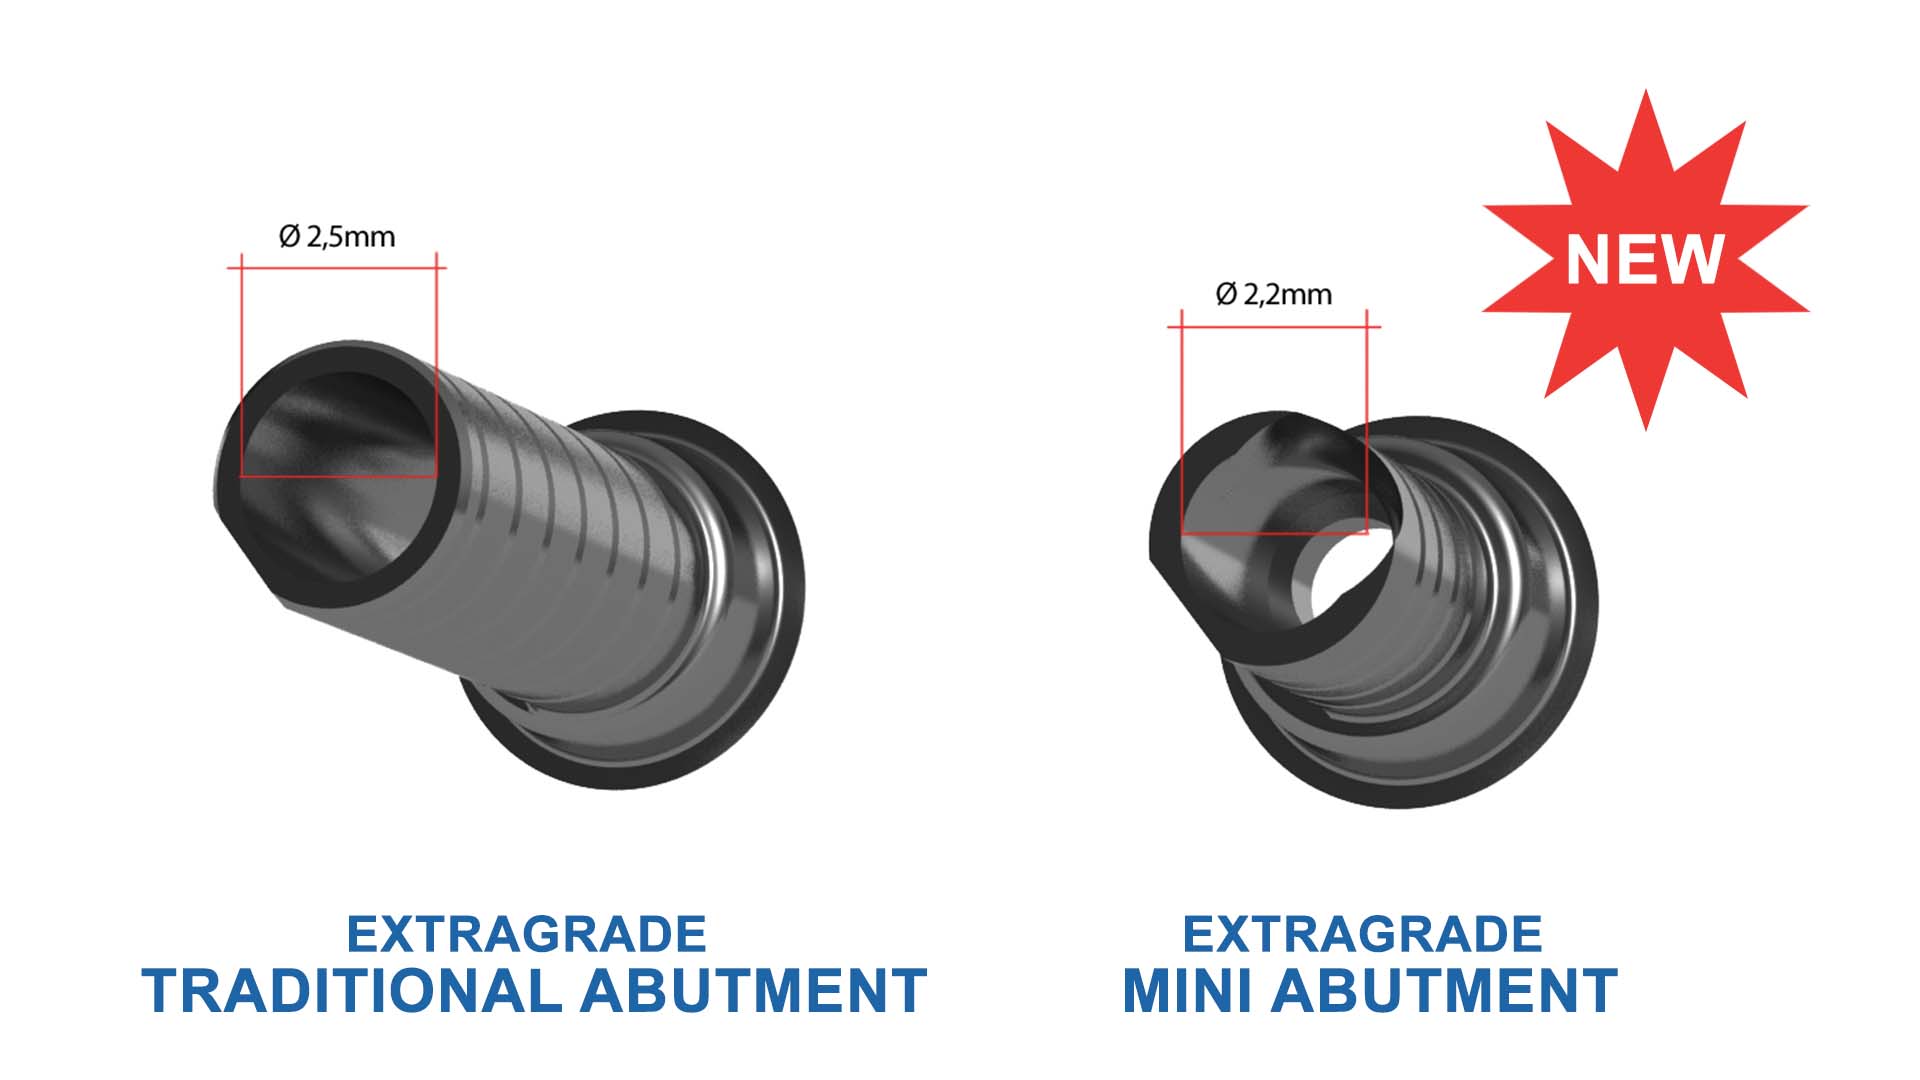 Traditional and mini extragrade titanium abutment